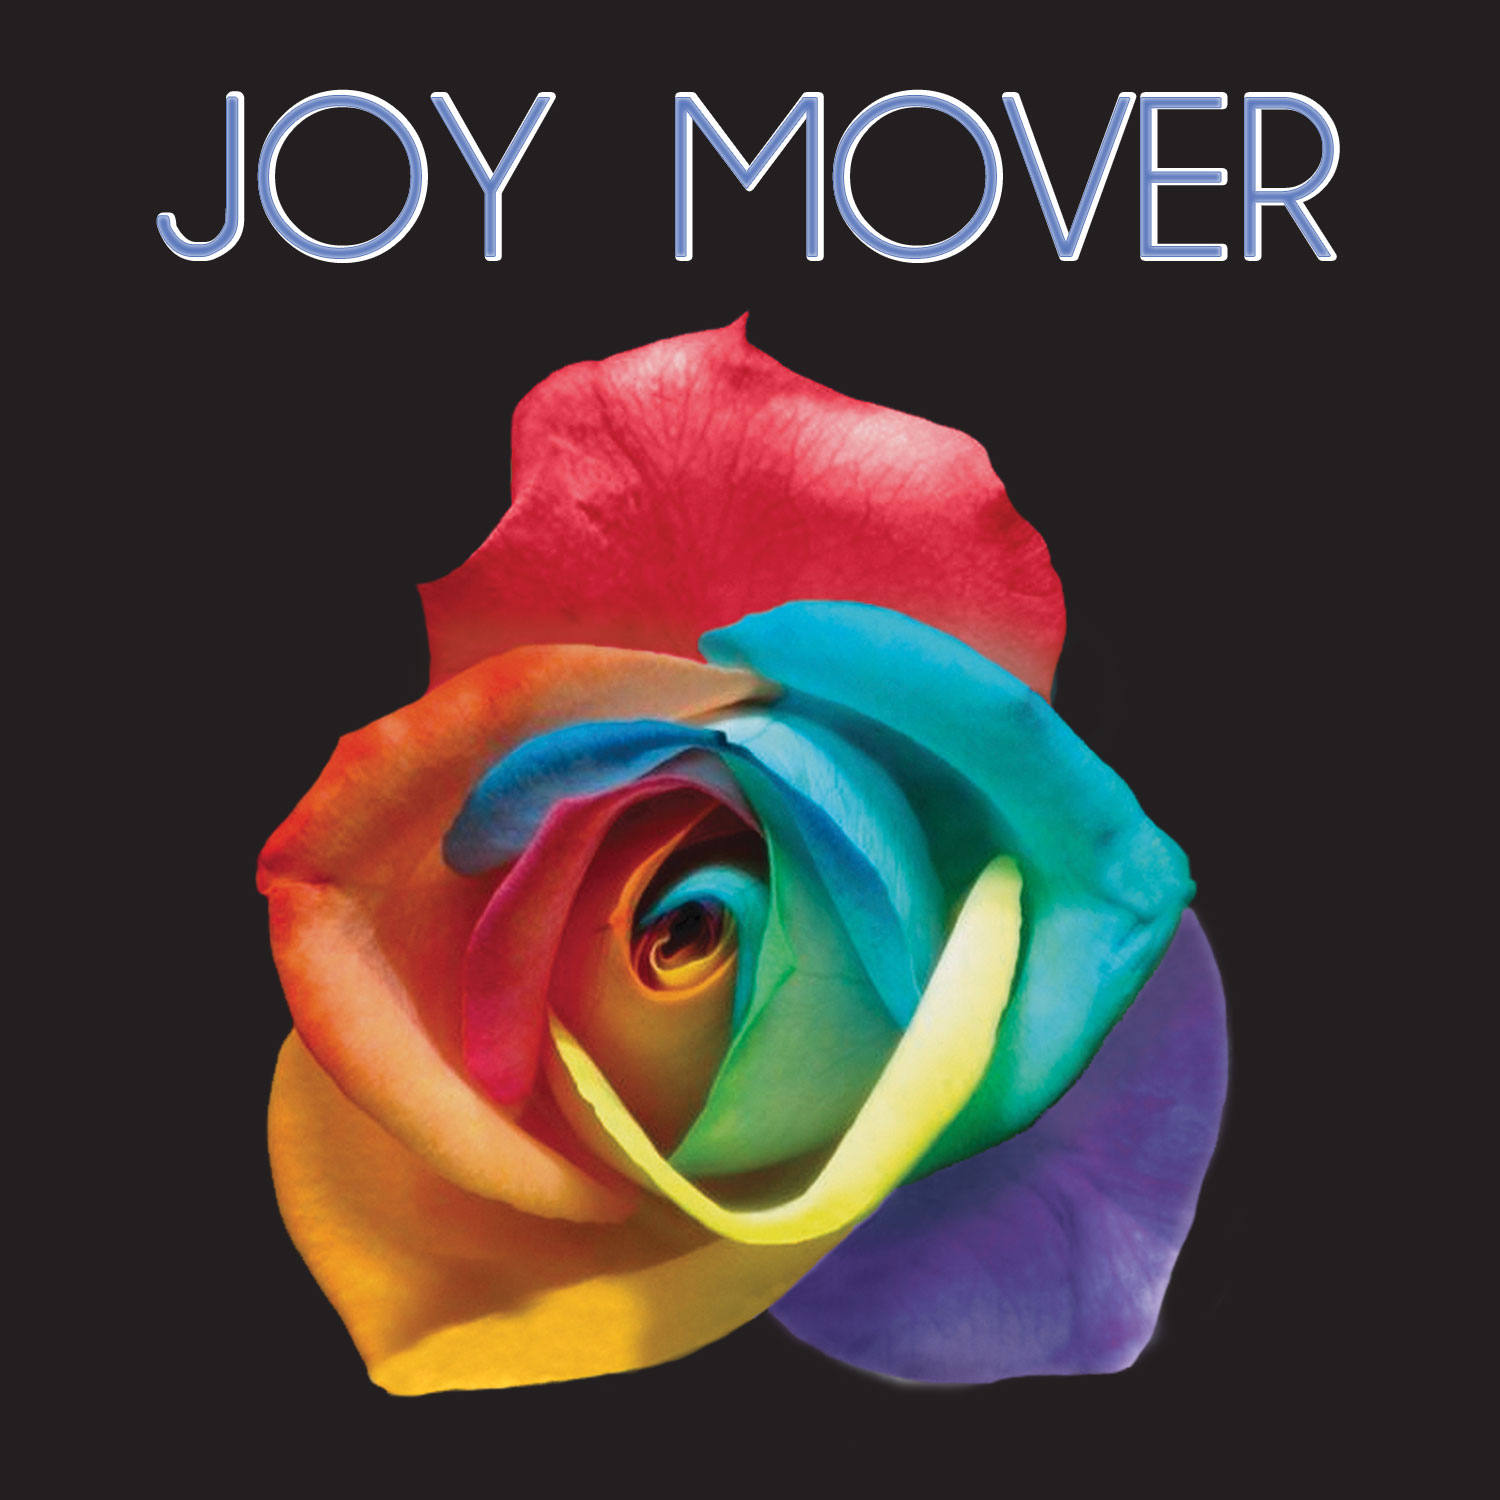 Joy Mover